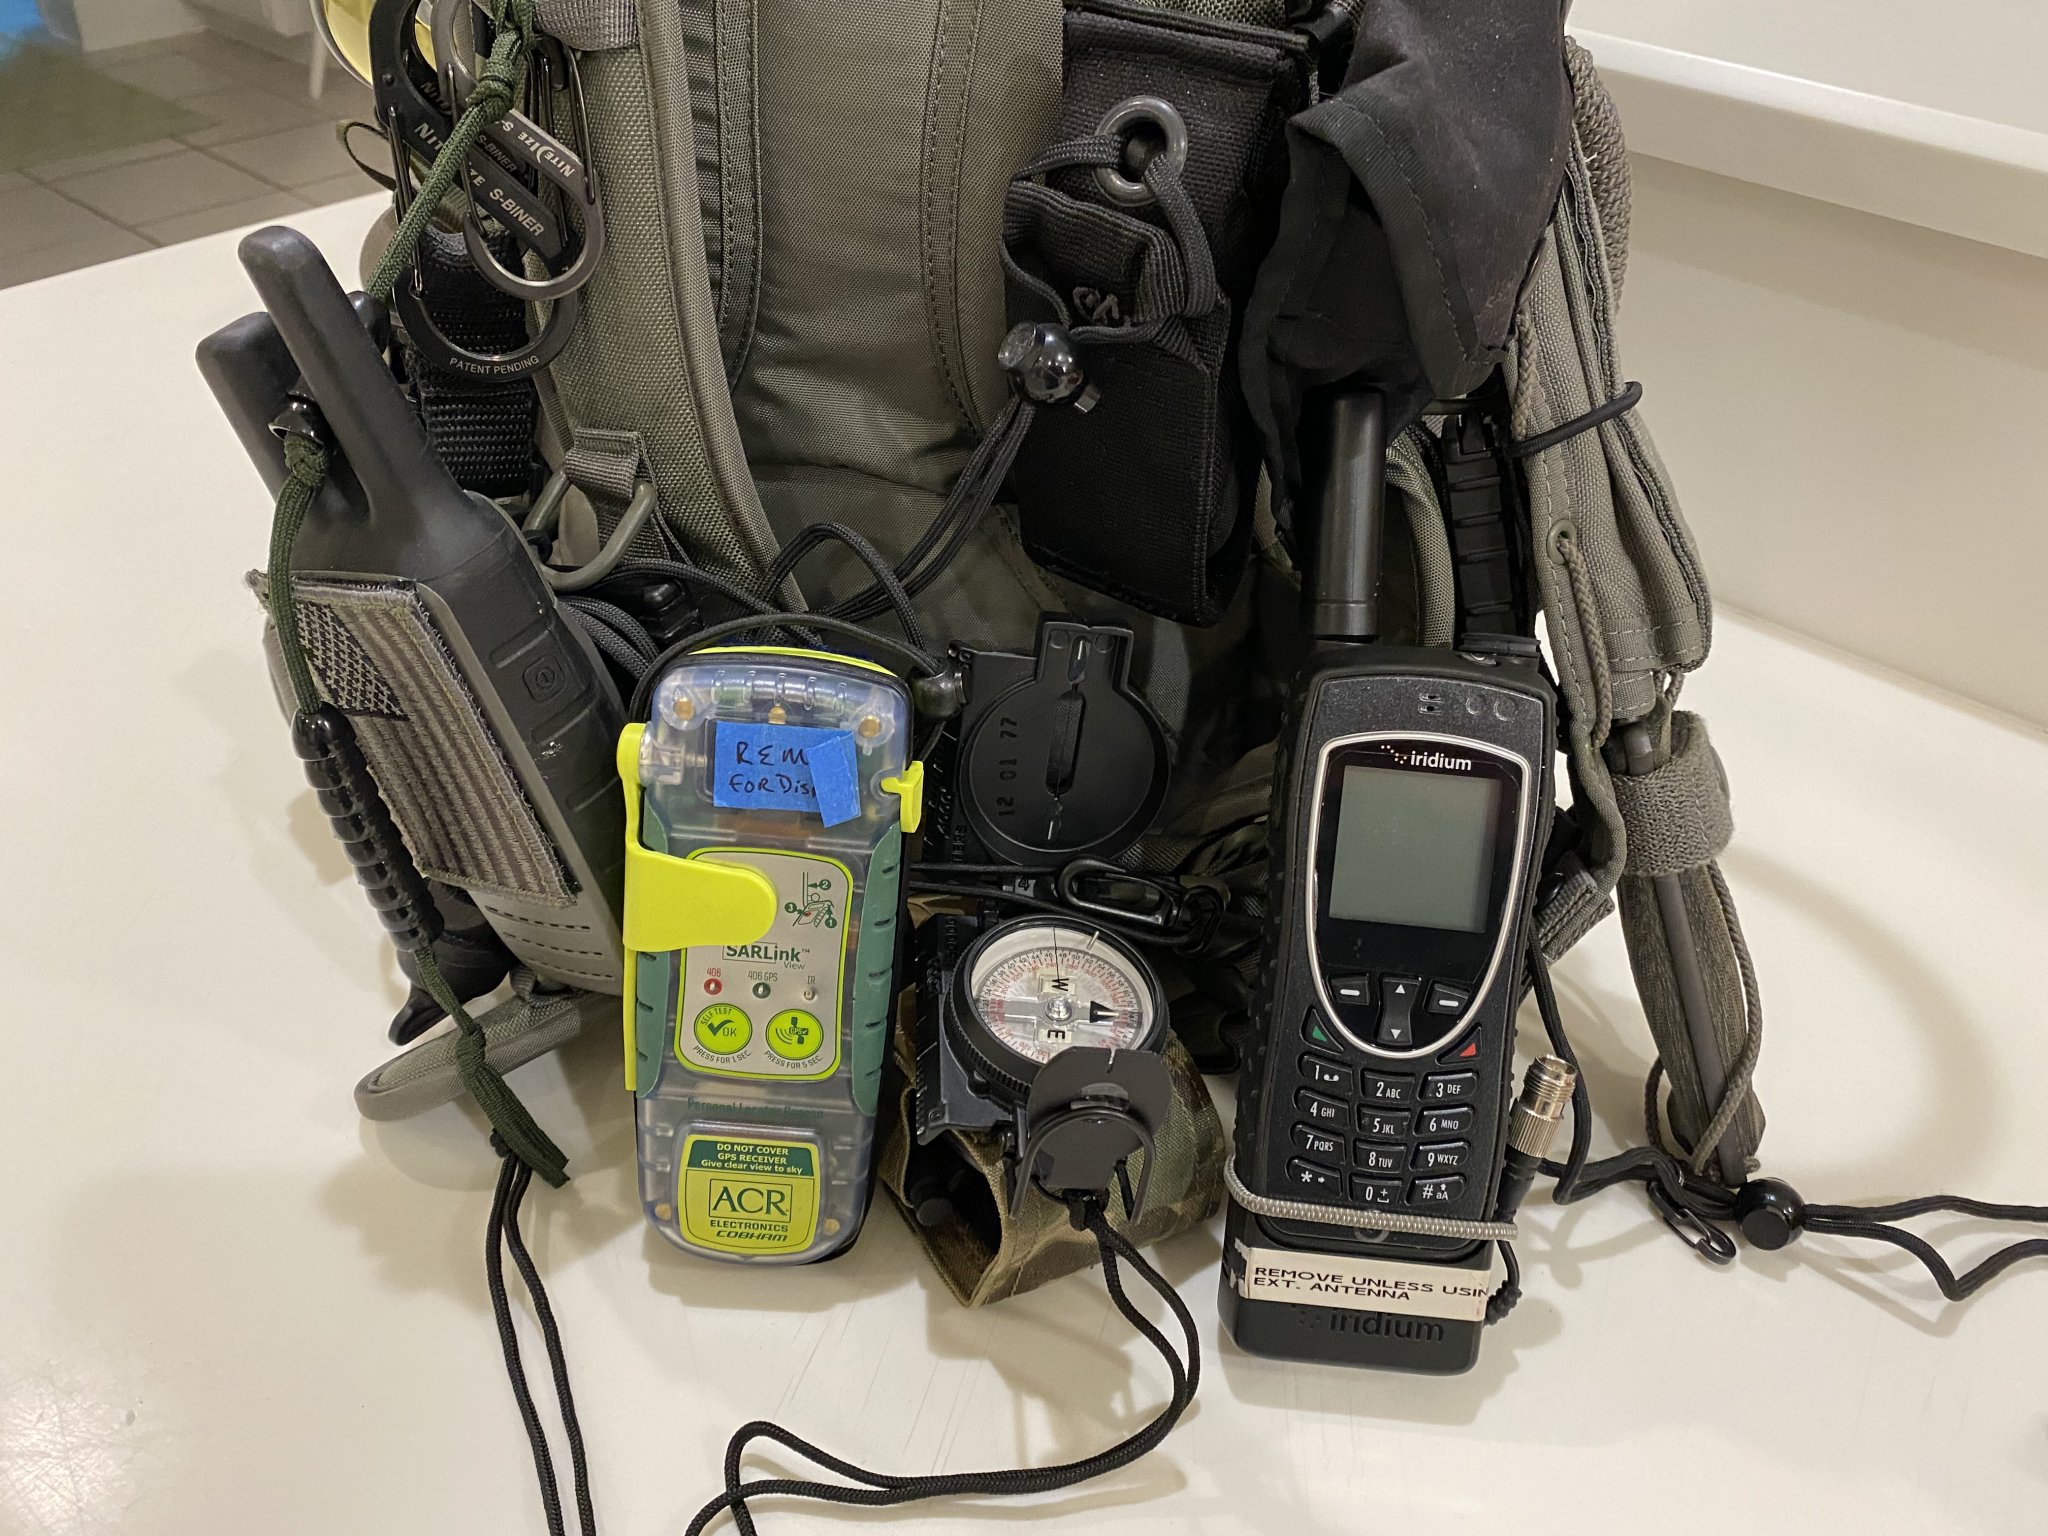 IMG_8493Green Backpack Alpha Case with Epirb Cammenga Compass Iridium Extreme Sat Phone Garmin...jpg